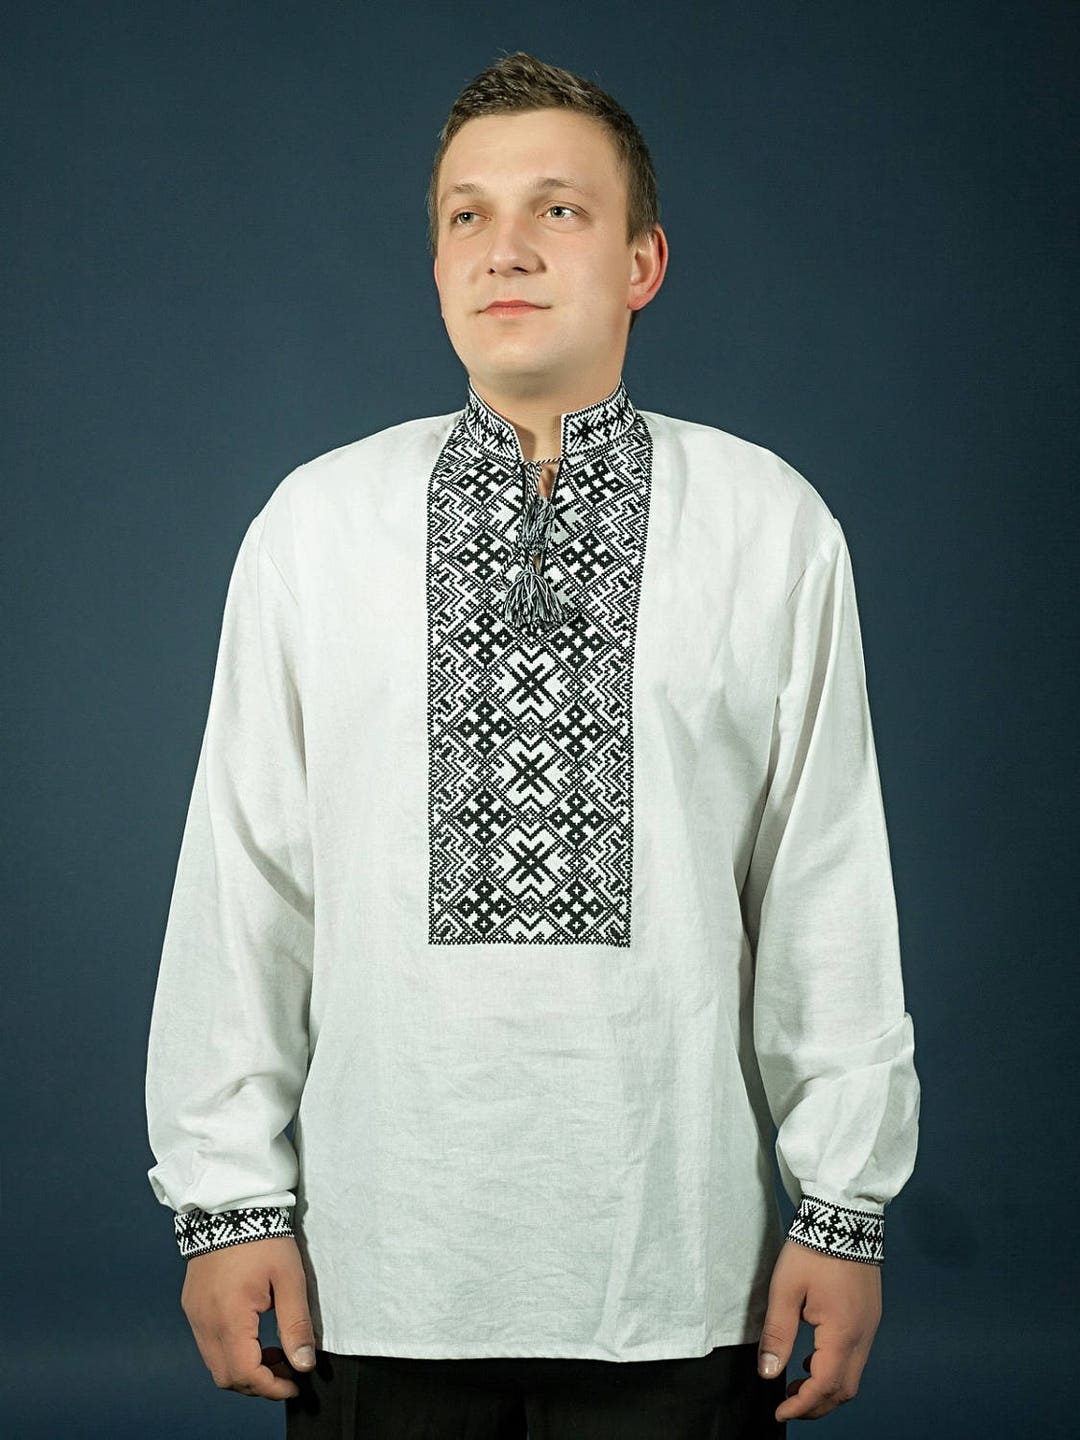 Ukrainian Embroidered Shirt for Boys and Adult Men. Men's Vyshyvanka ...